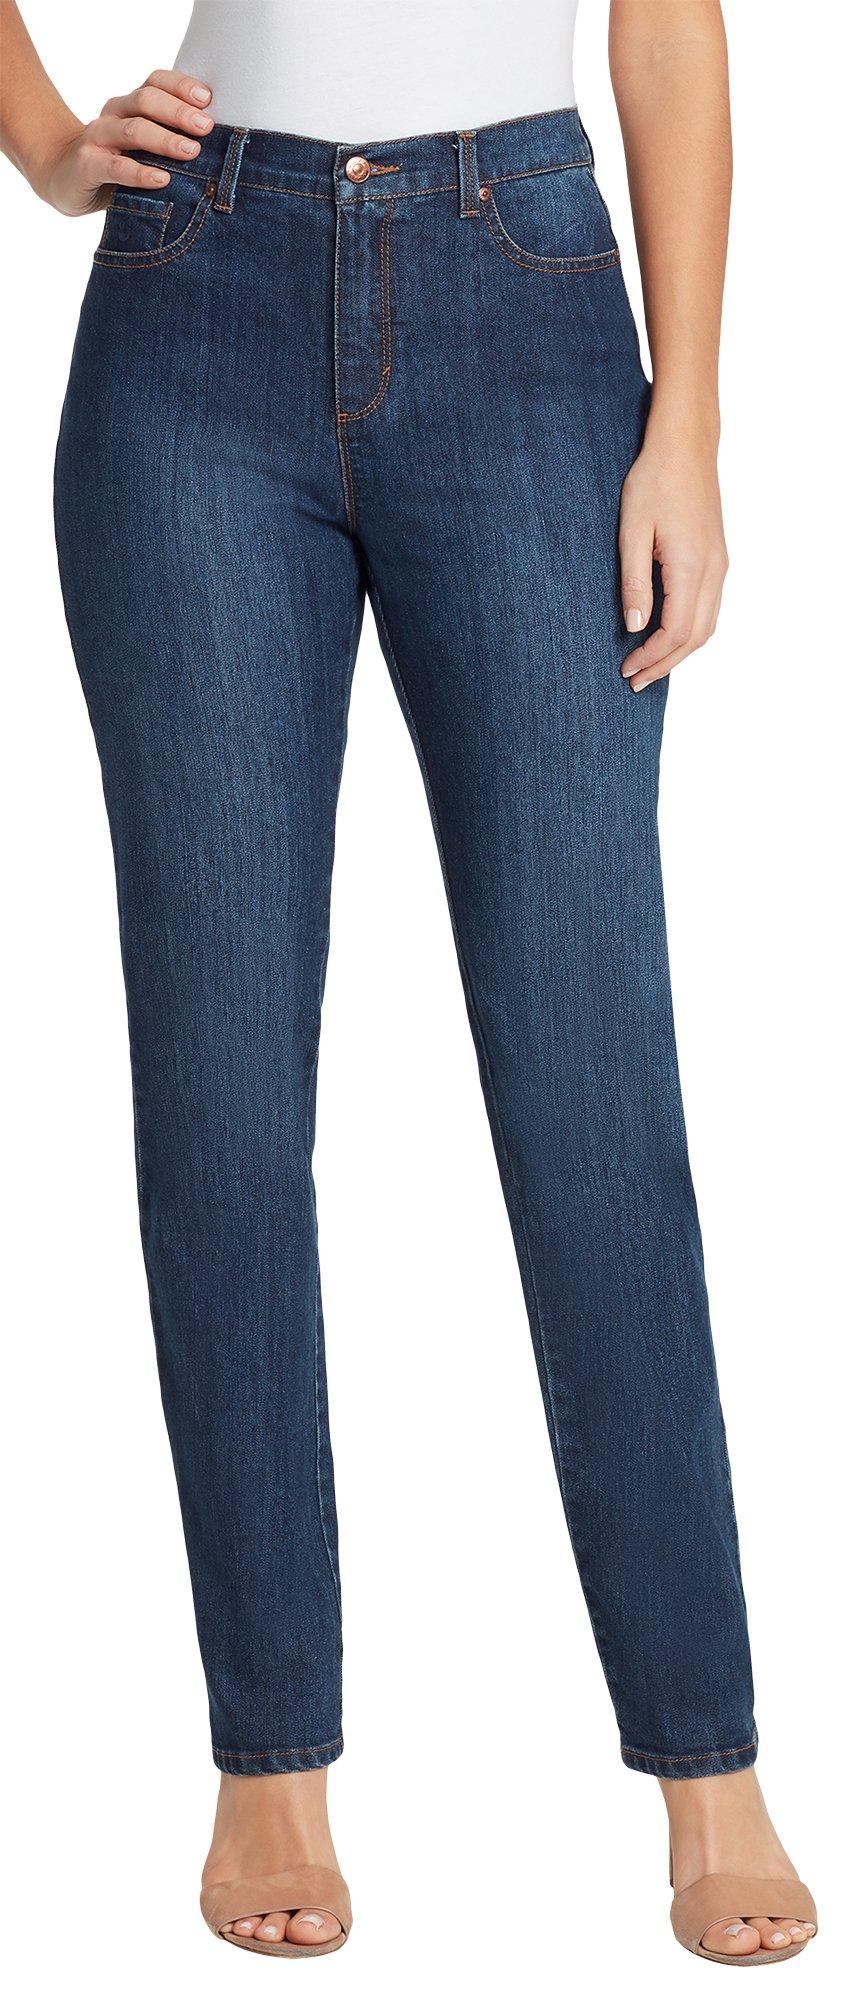 amanda jeans short